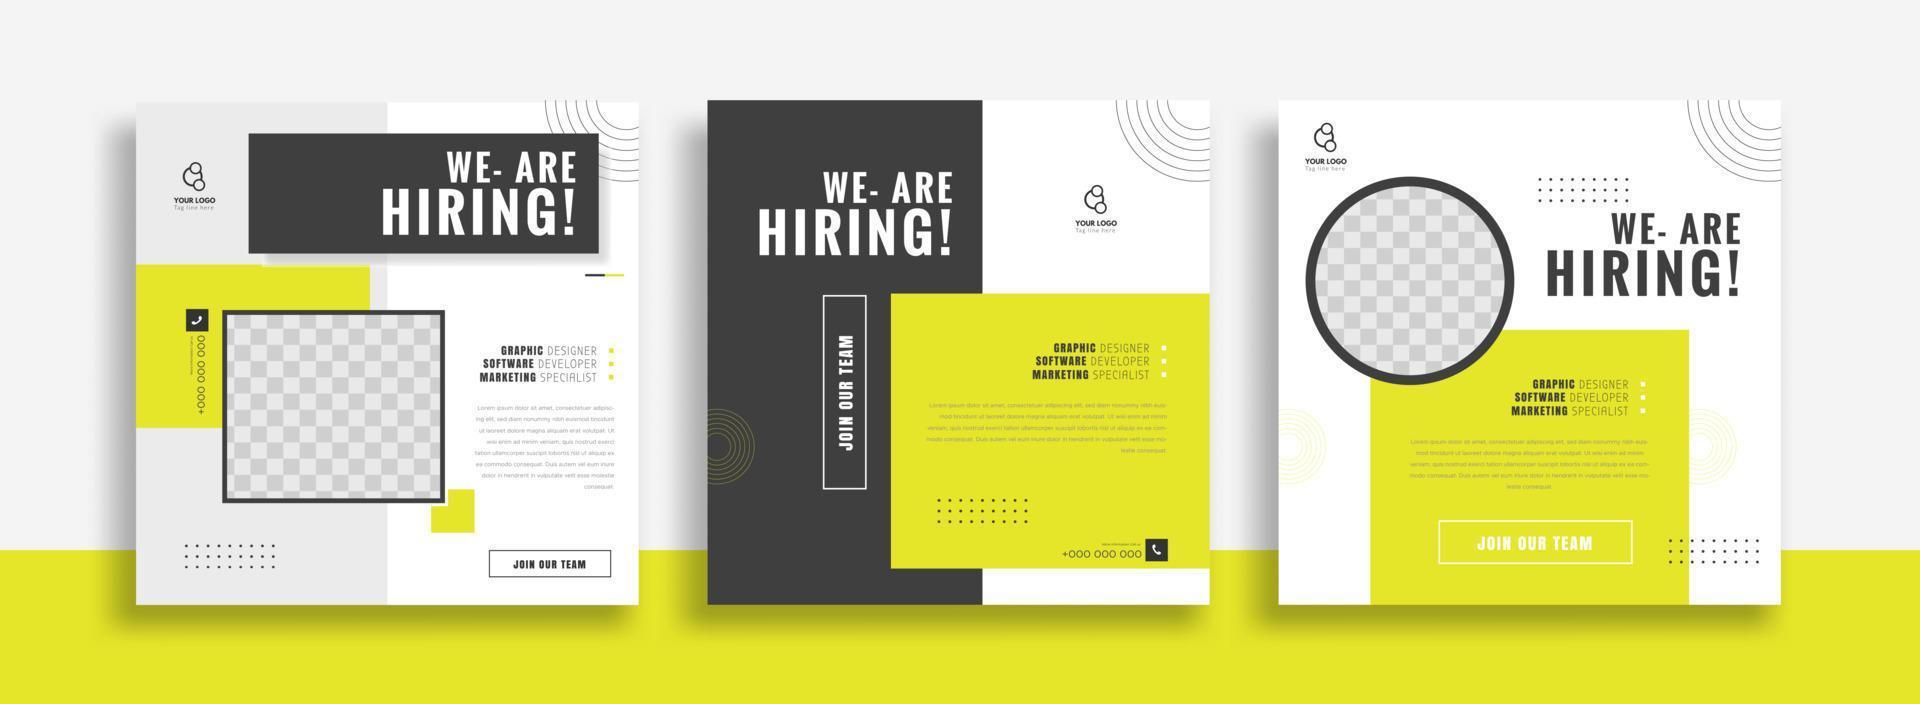 We are hiring job vacancy social media post banner design template. We are hiring job vacancy square web banner design vector